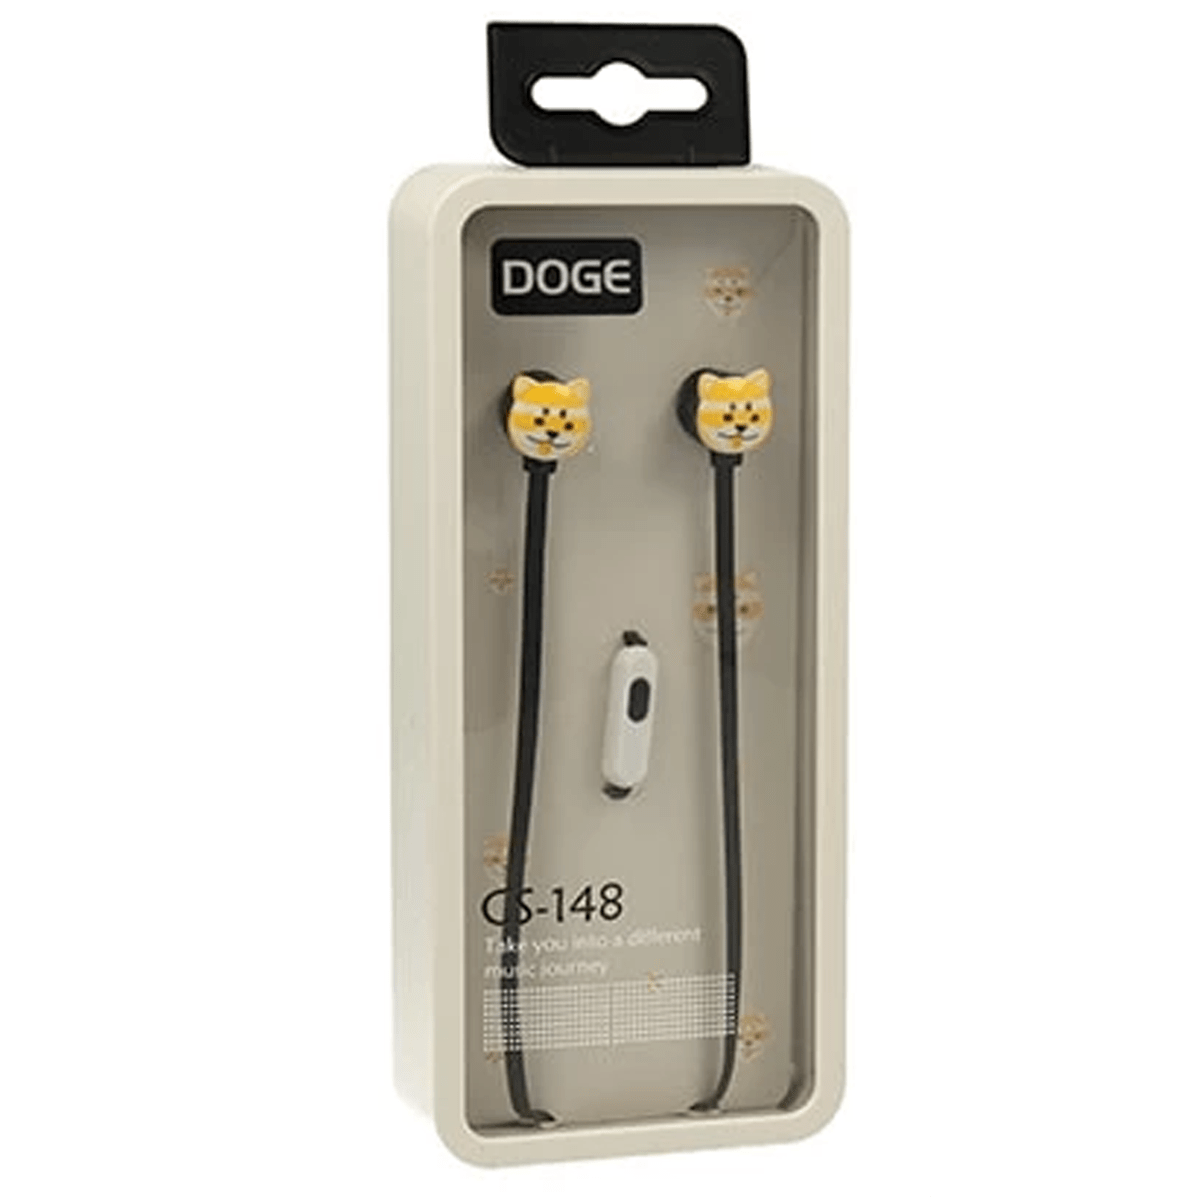 Universal Wired Headset DOGE (CS148)